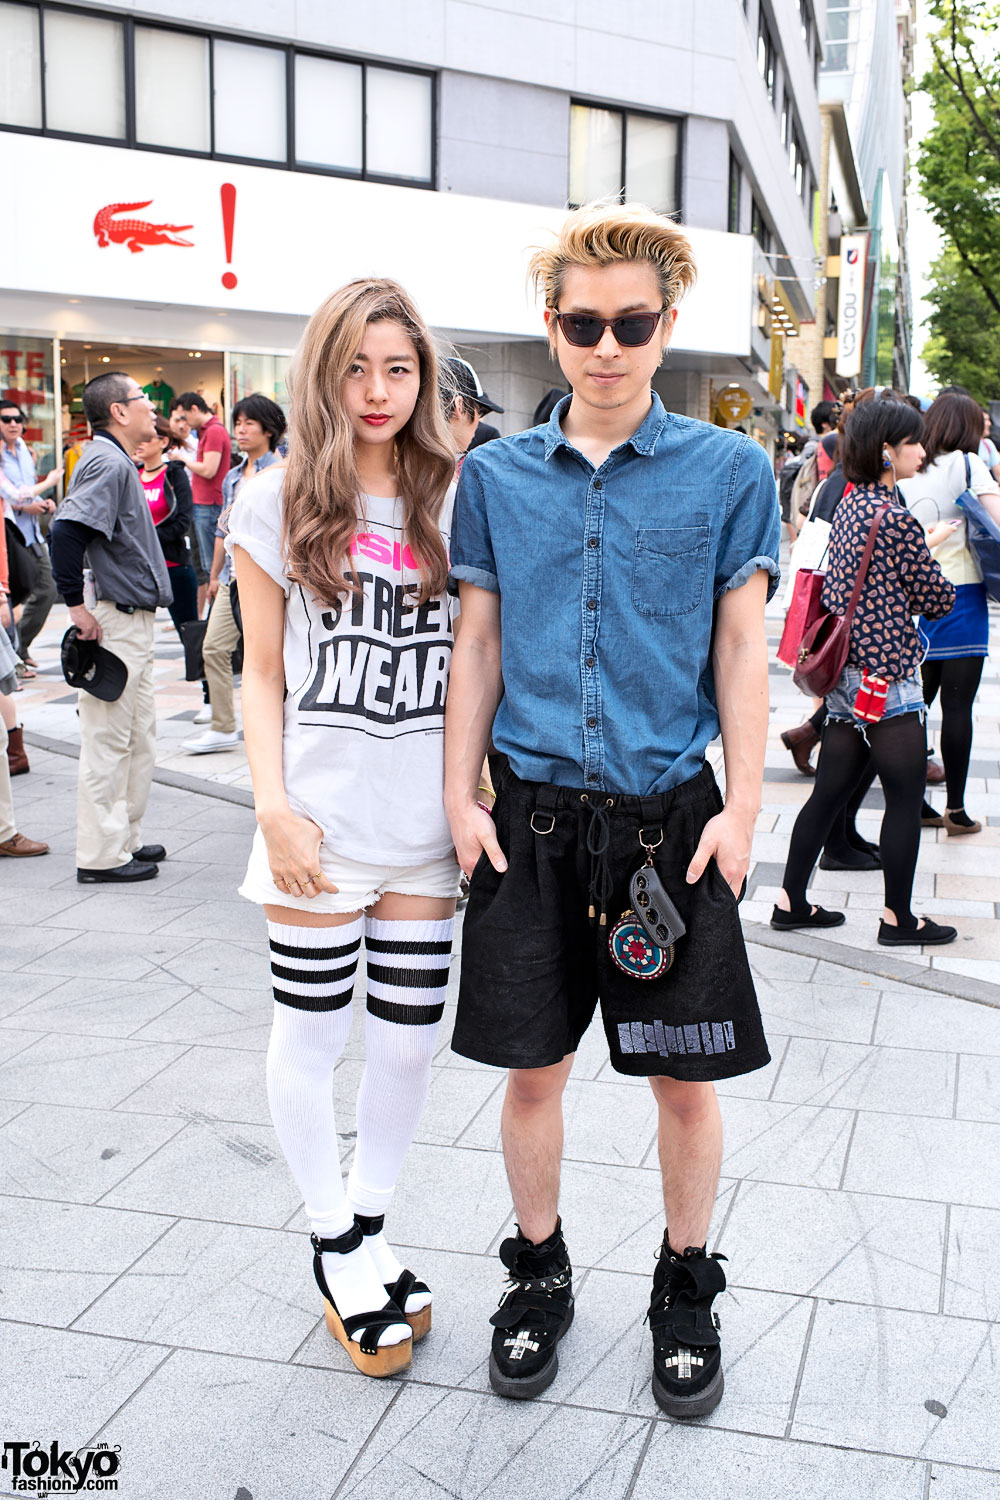 https://tokyofashion.com/wp-content/uploads/2012/05/Vision-Street-Wear-Studded-Boots-Harajuku-2012-04-29-DSC1272.jpg